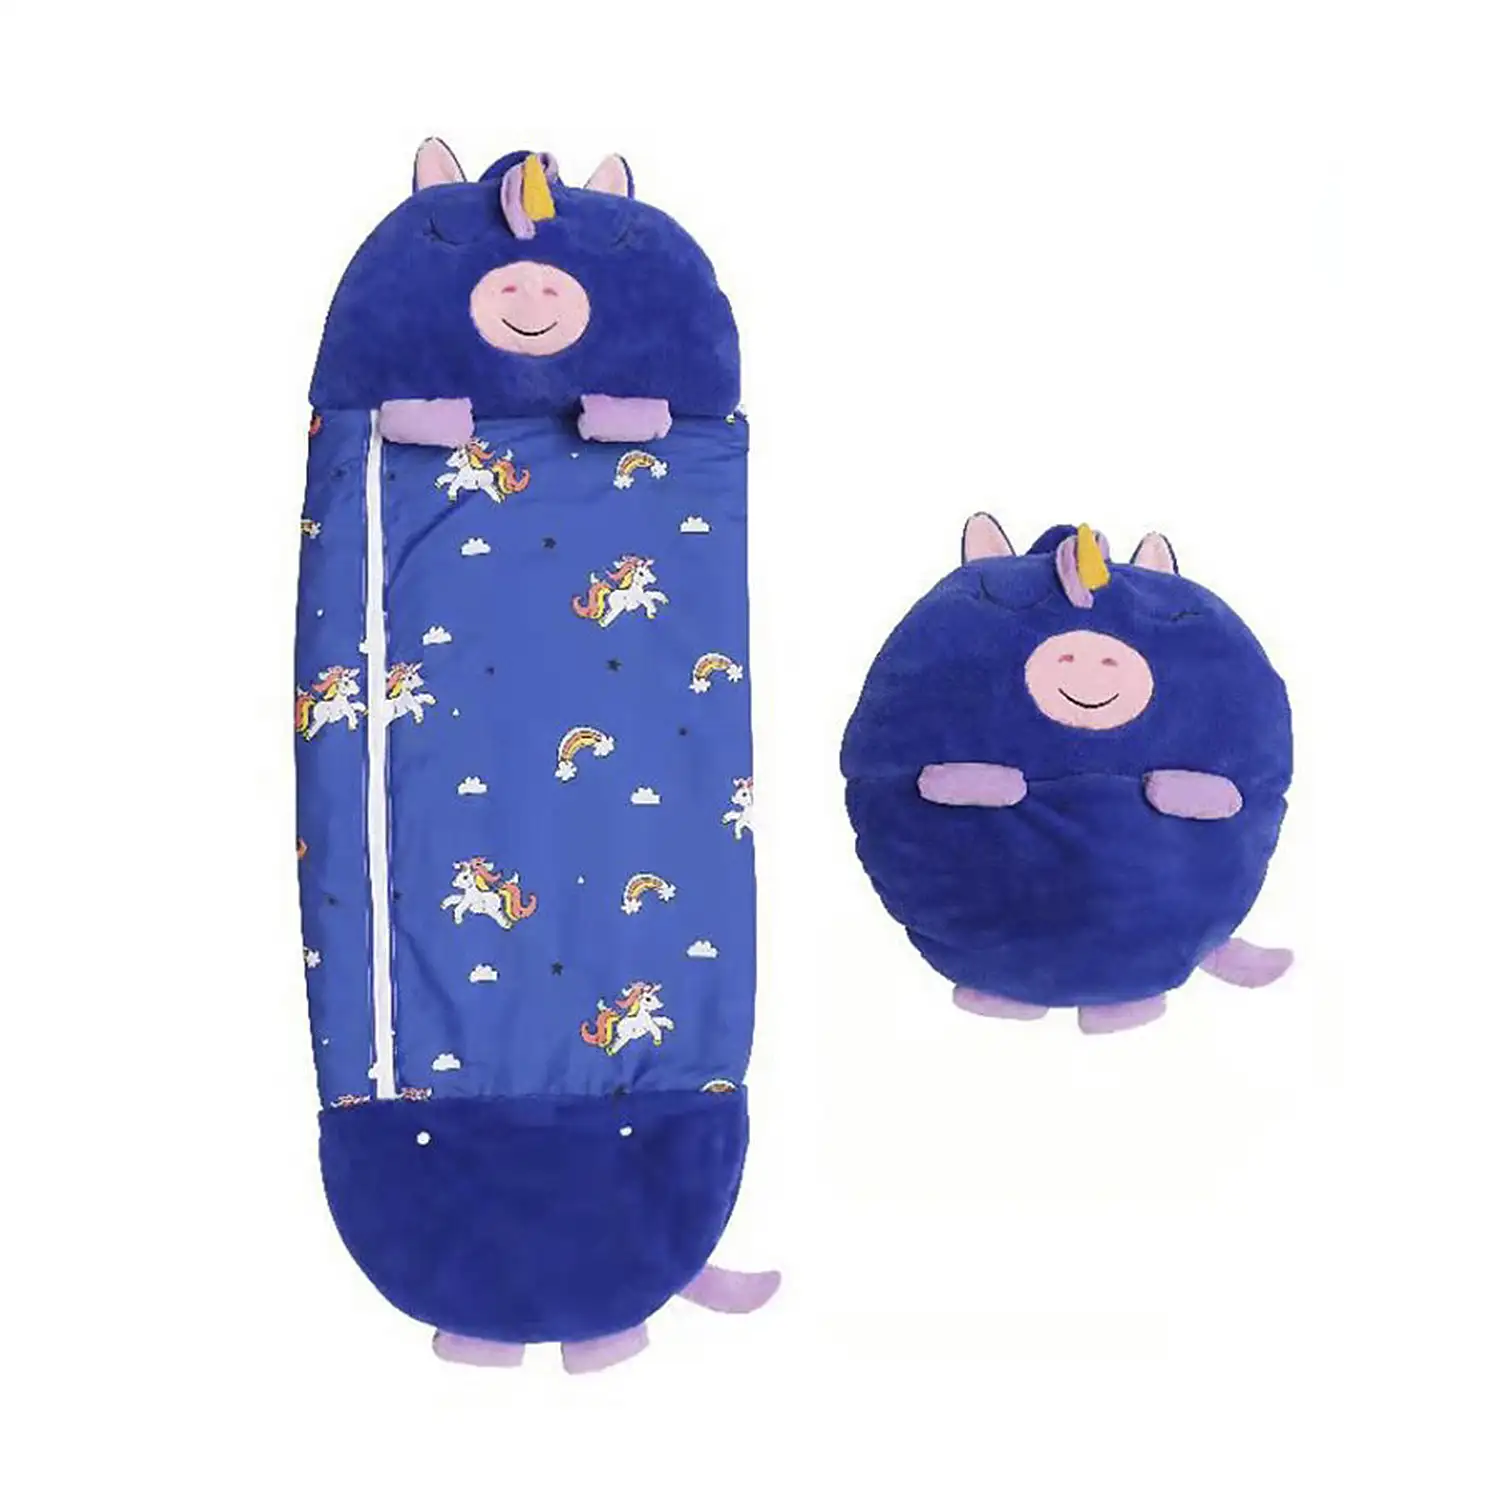 Saco de dormir convertible en almohada, para niños, Cerdicornio Azul. Tacto peluche. Pequeño / S: 128x45cm.